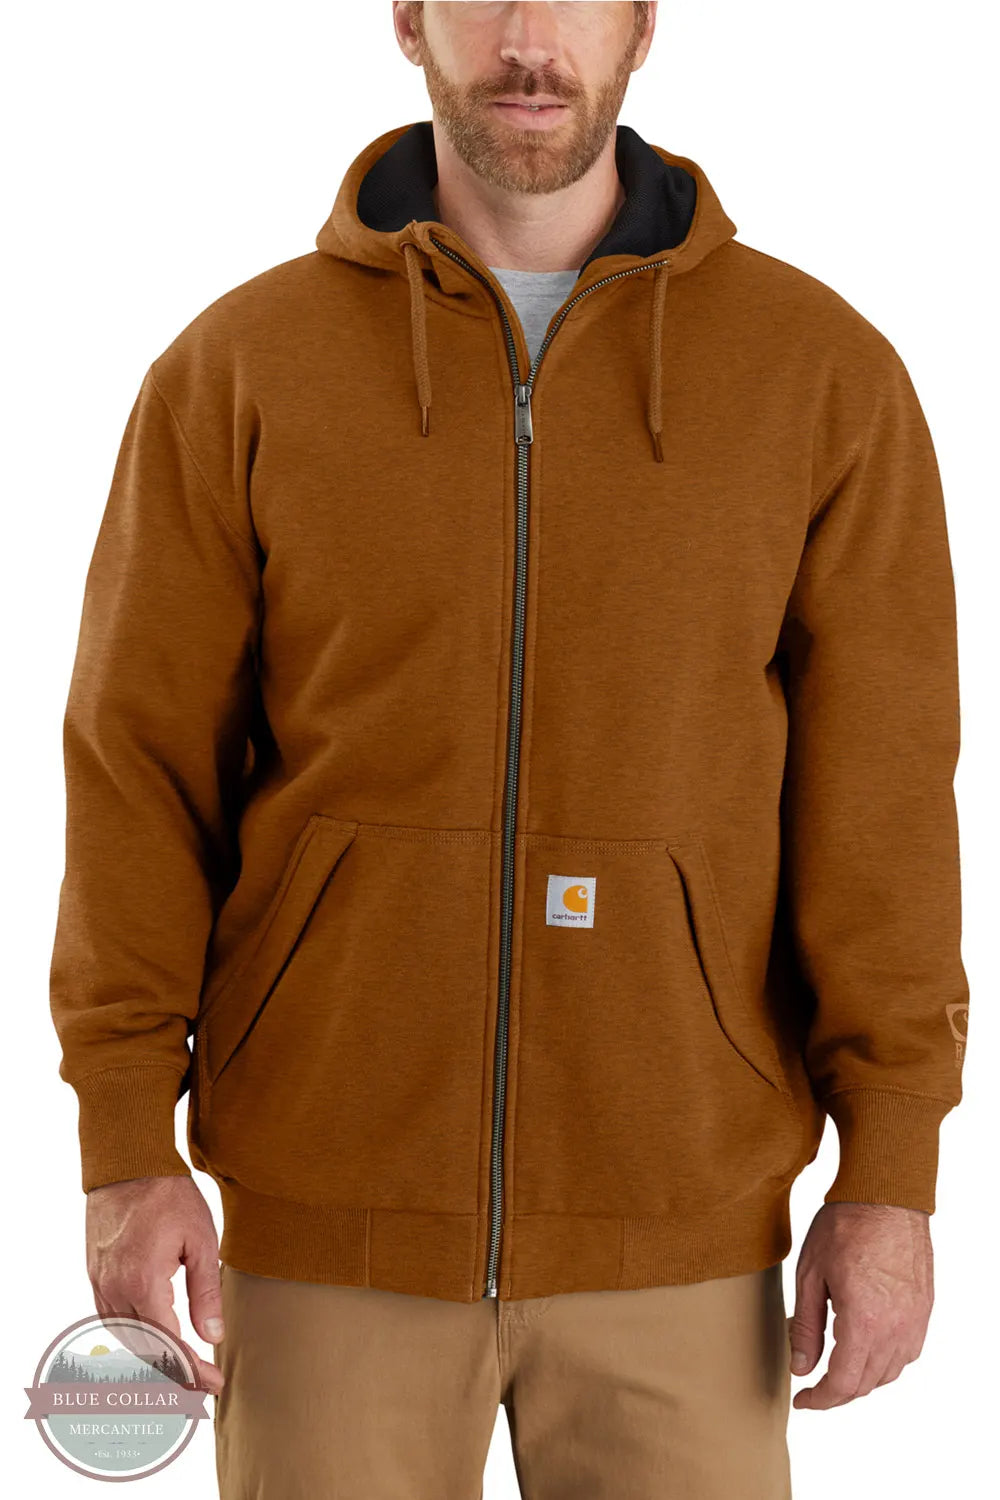 Rain Defender Loose Fit Midweight Thermal-Lined Full-Zip Sweatshirt by Carhartt 104078